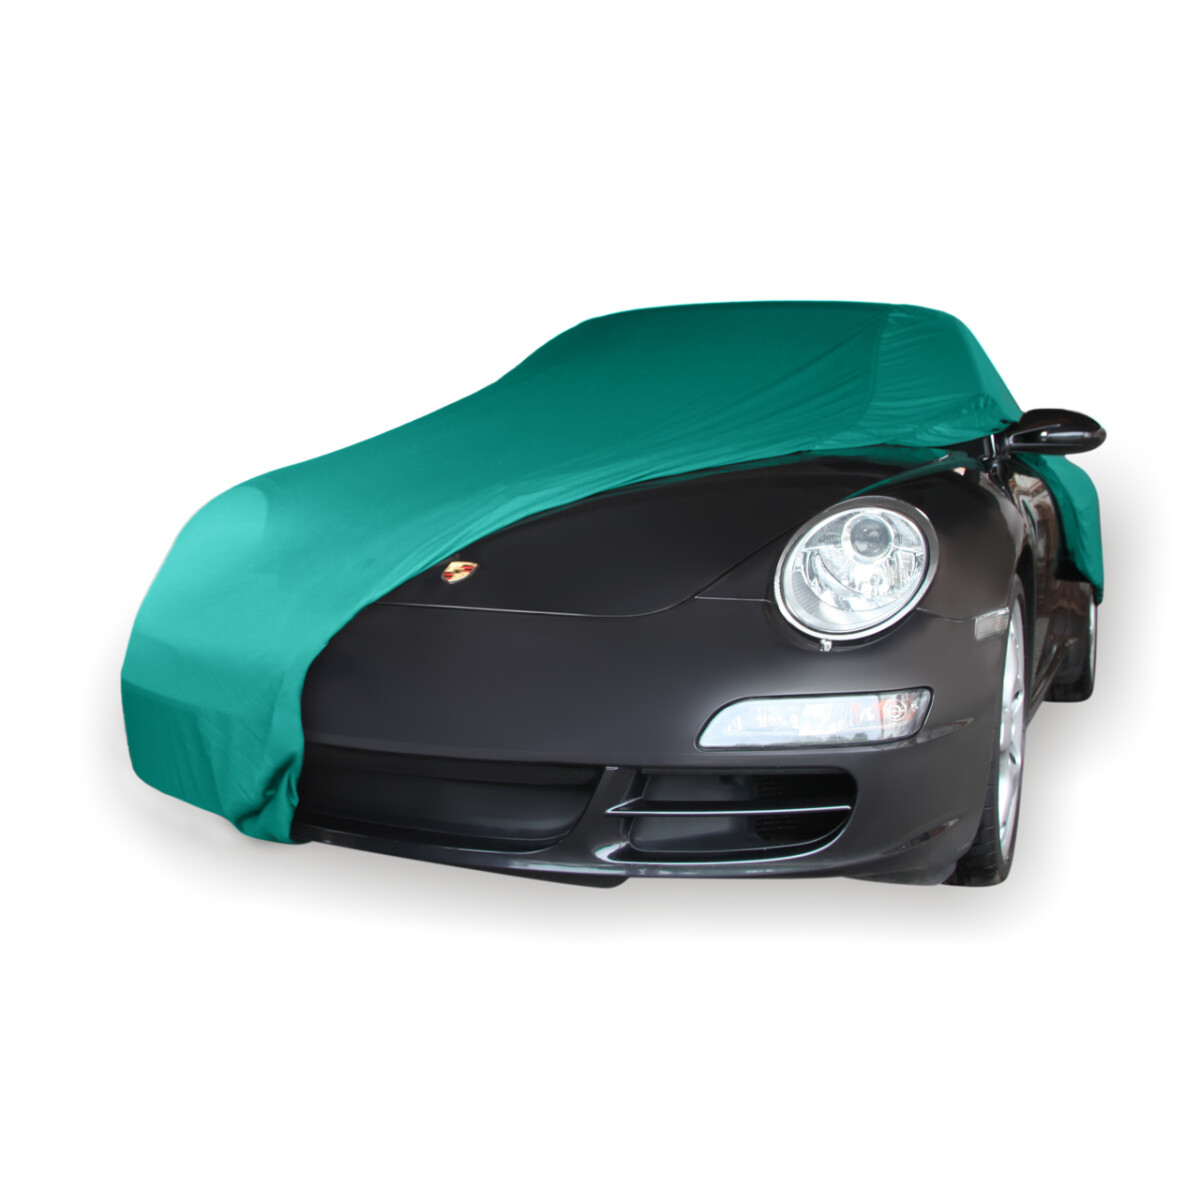 https://www.autoabdeckung.com/media/image/product/11674/lg/autoabdeckung-soft-indoor-car-cover-fuer-audi-a6-c6-limousine-4f_2.jpg